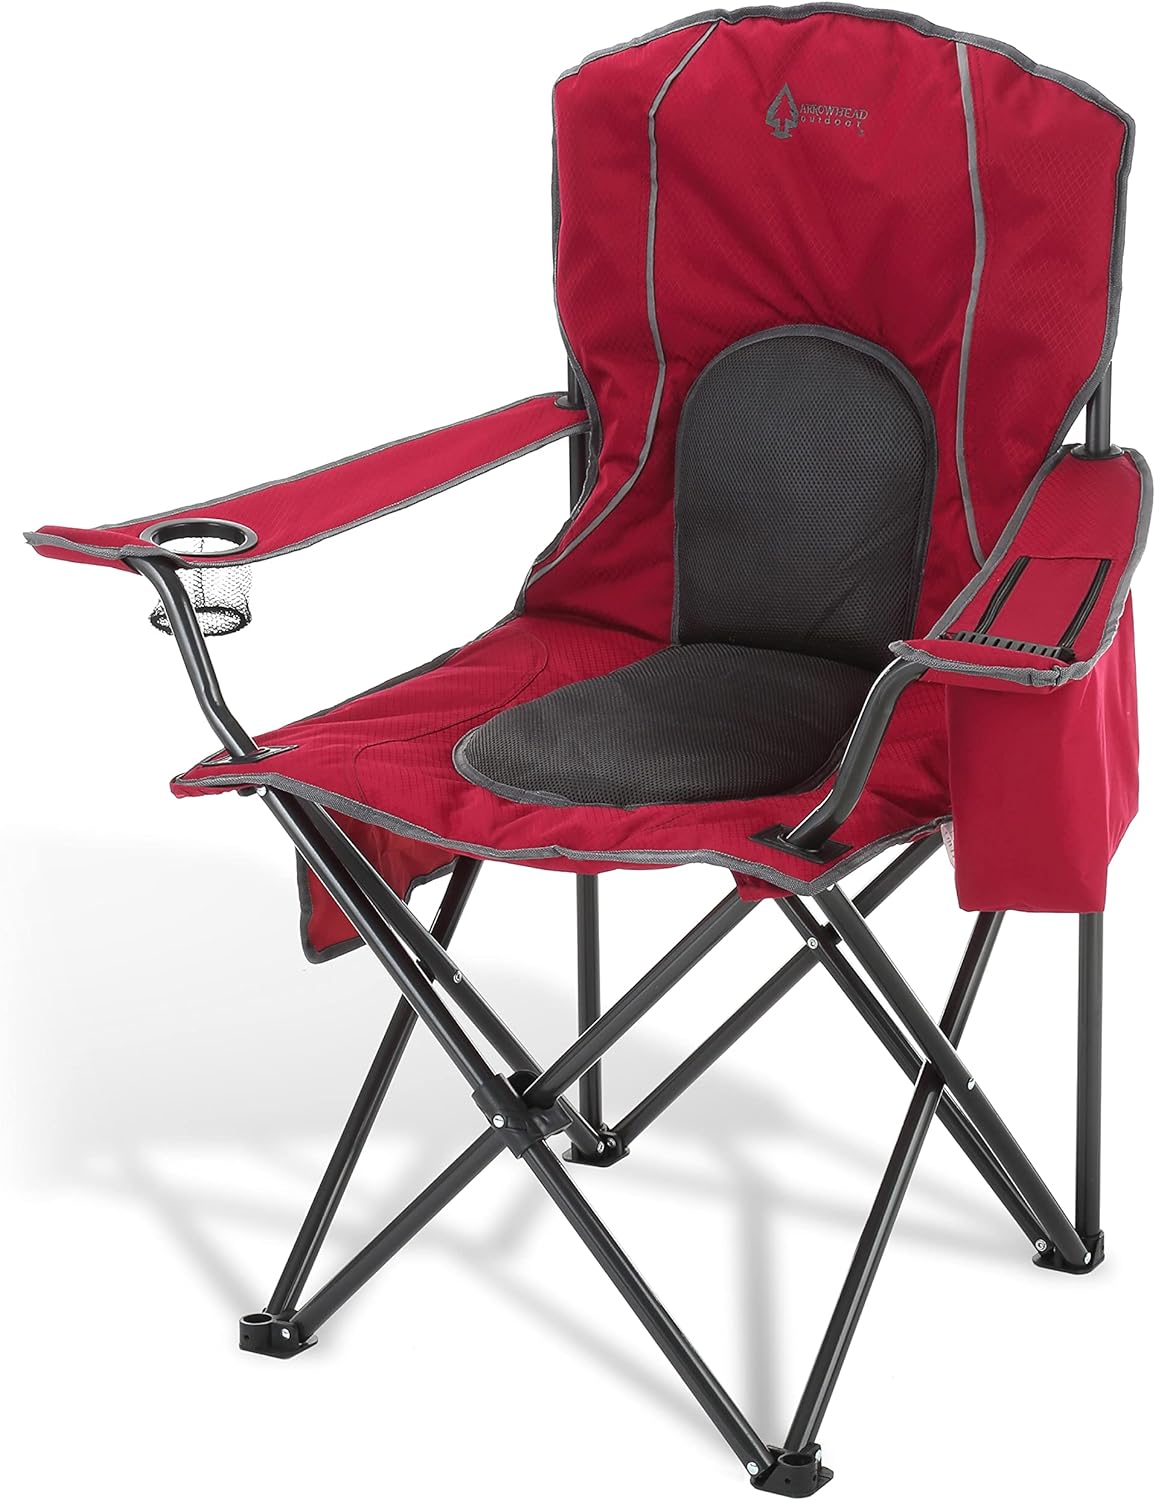 Chairs – Arrowhead Outdoor